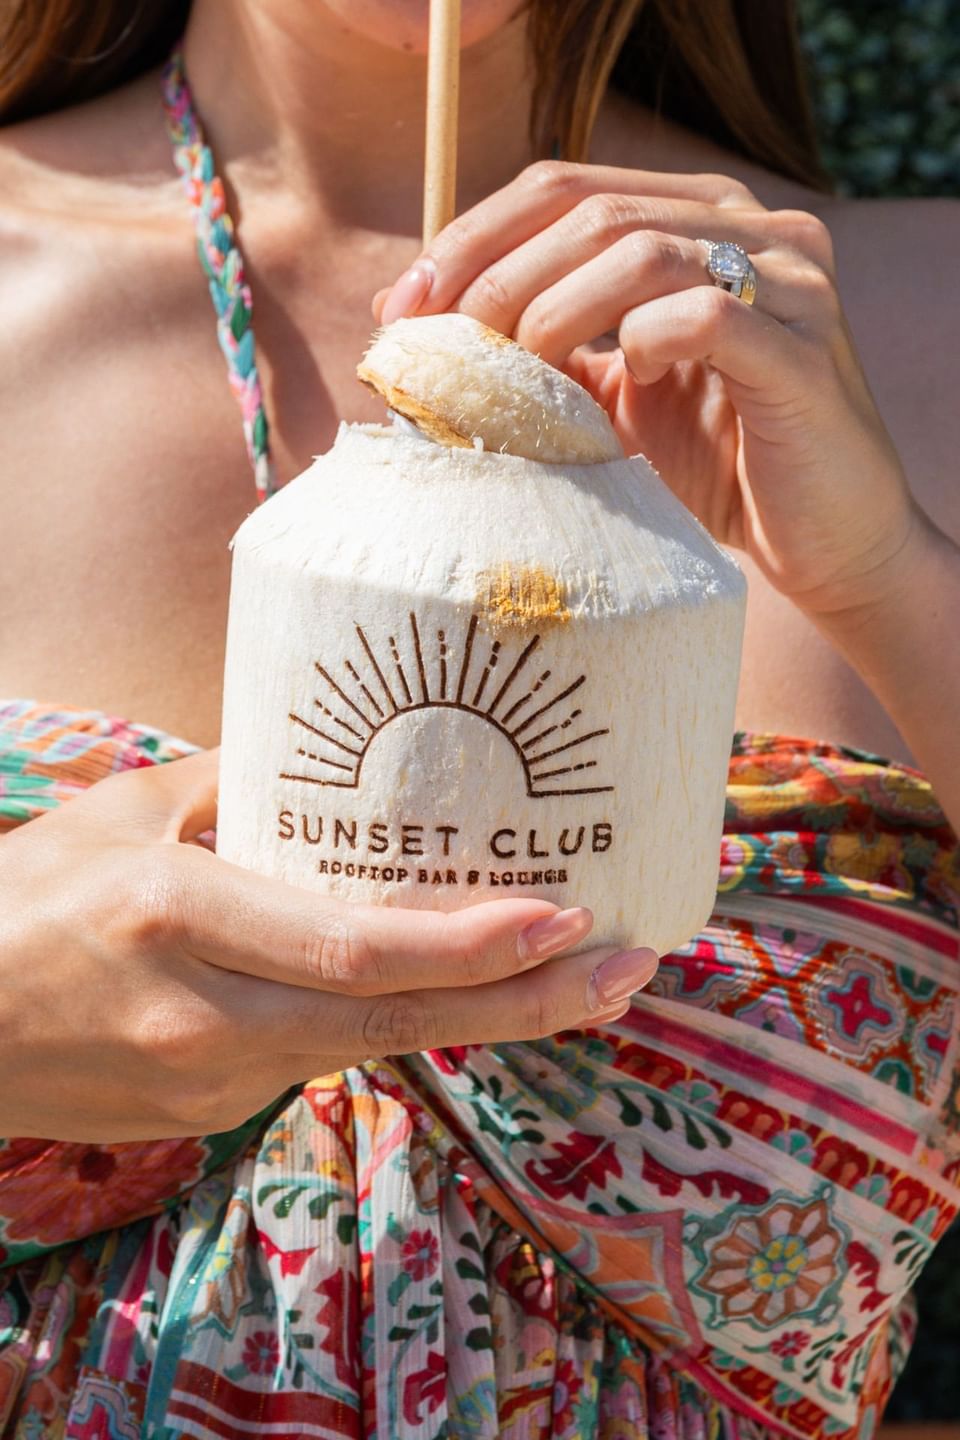 Hotel-branded trimmed coconut at Costa Beach Resort